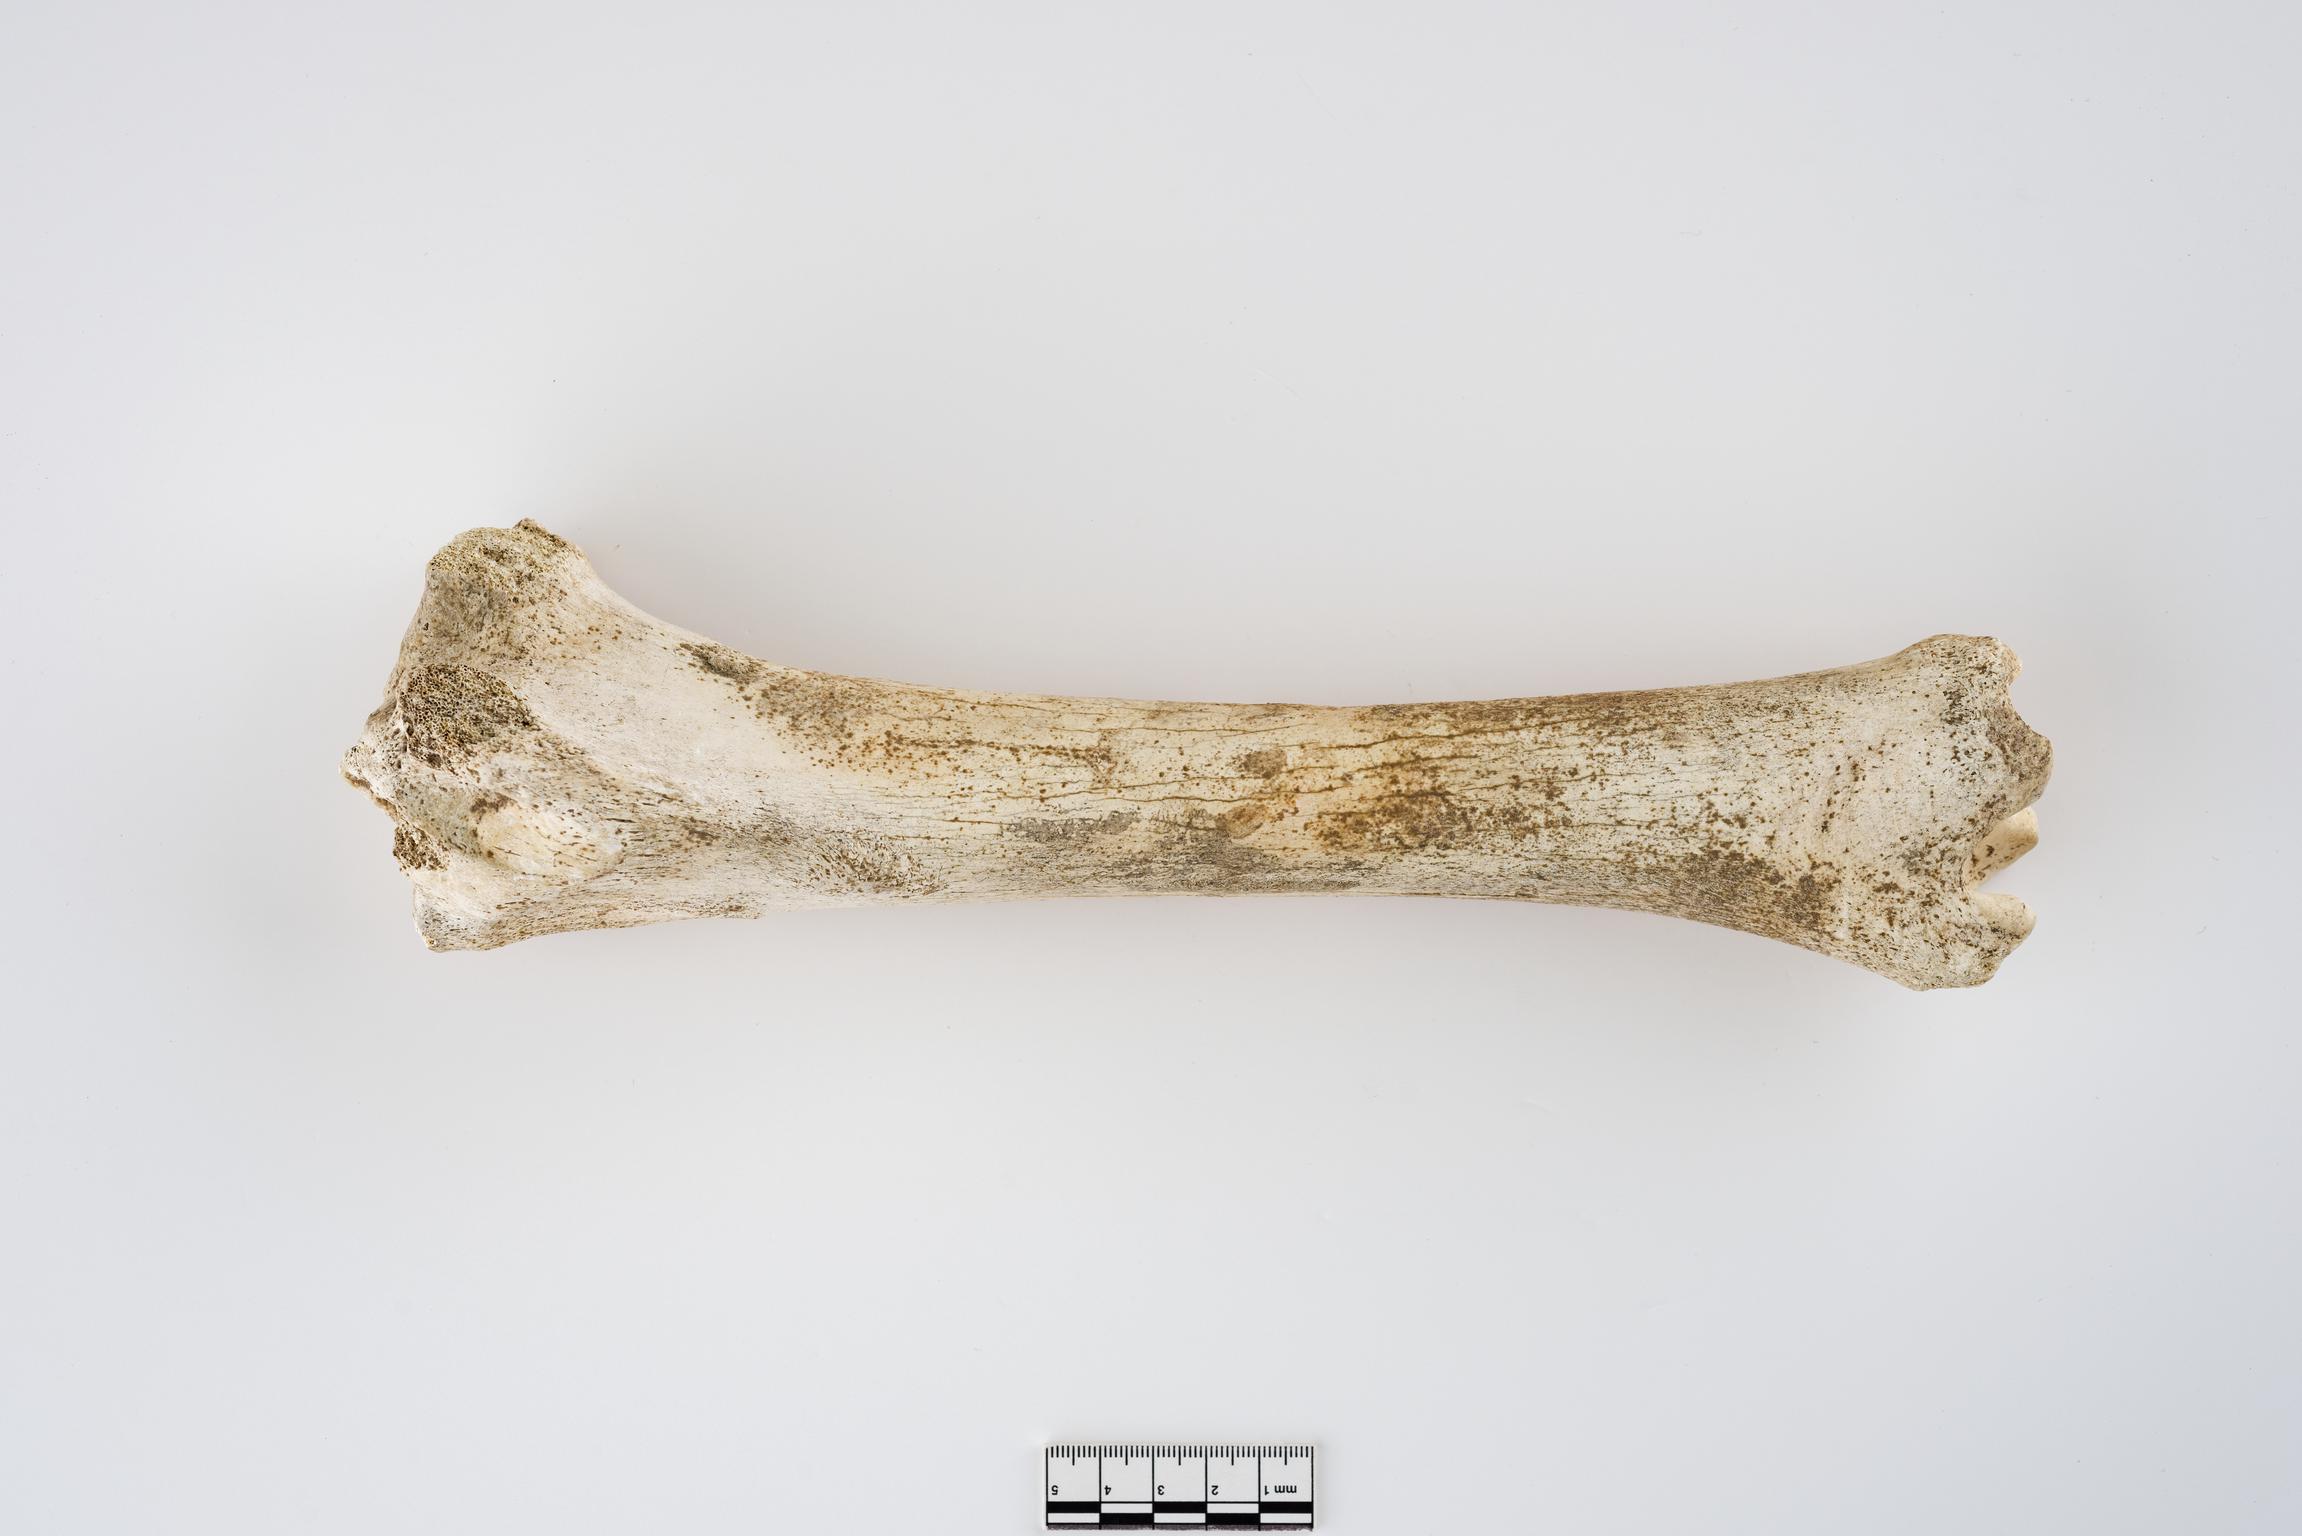 Holocene horse bone